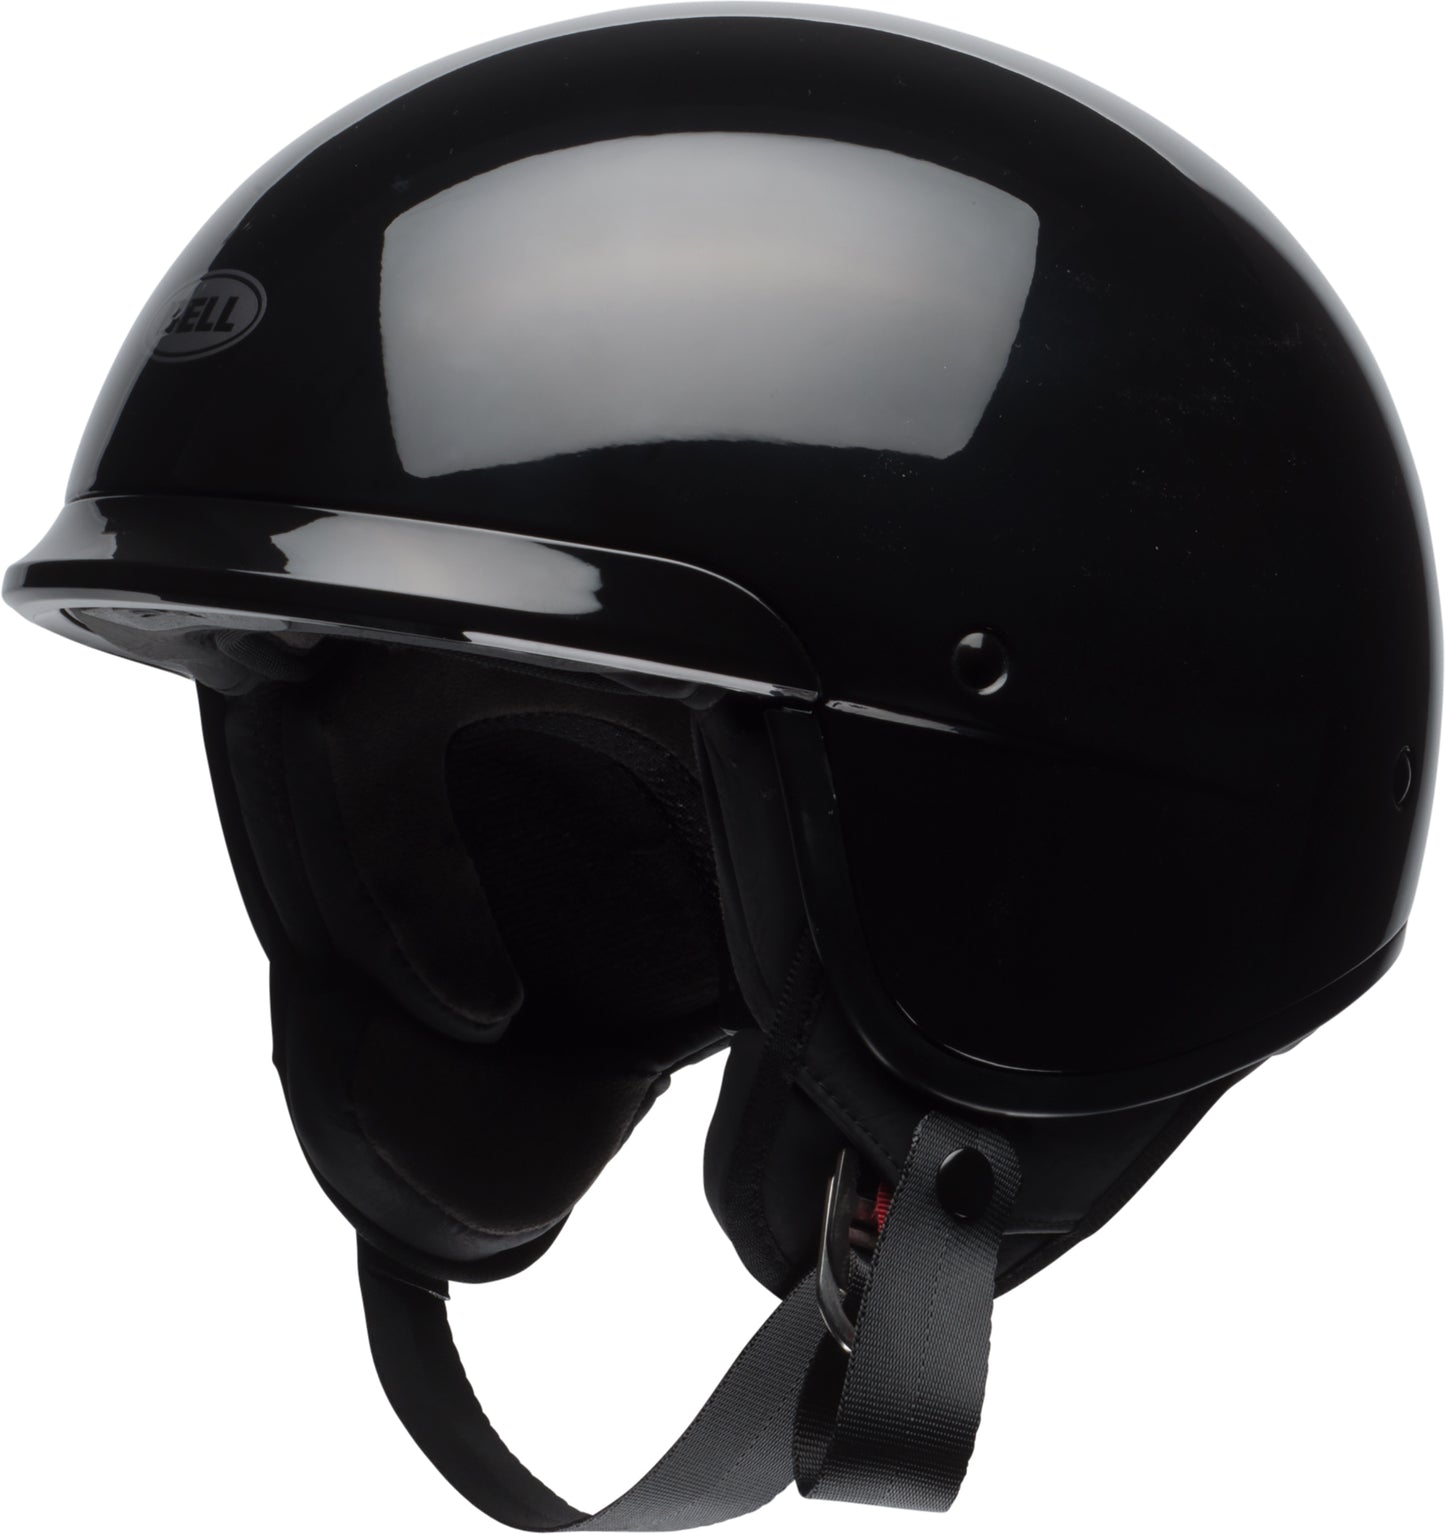 Bell Helmet Scout Air (Gloss Black)